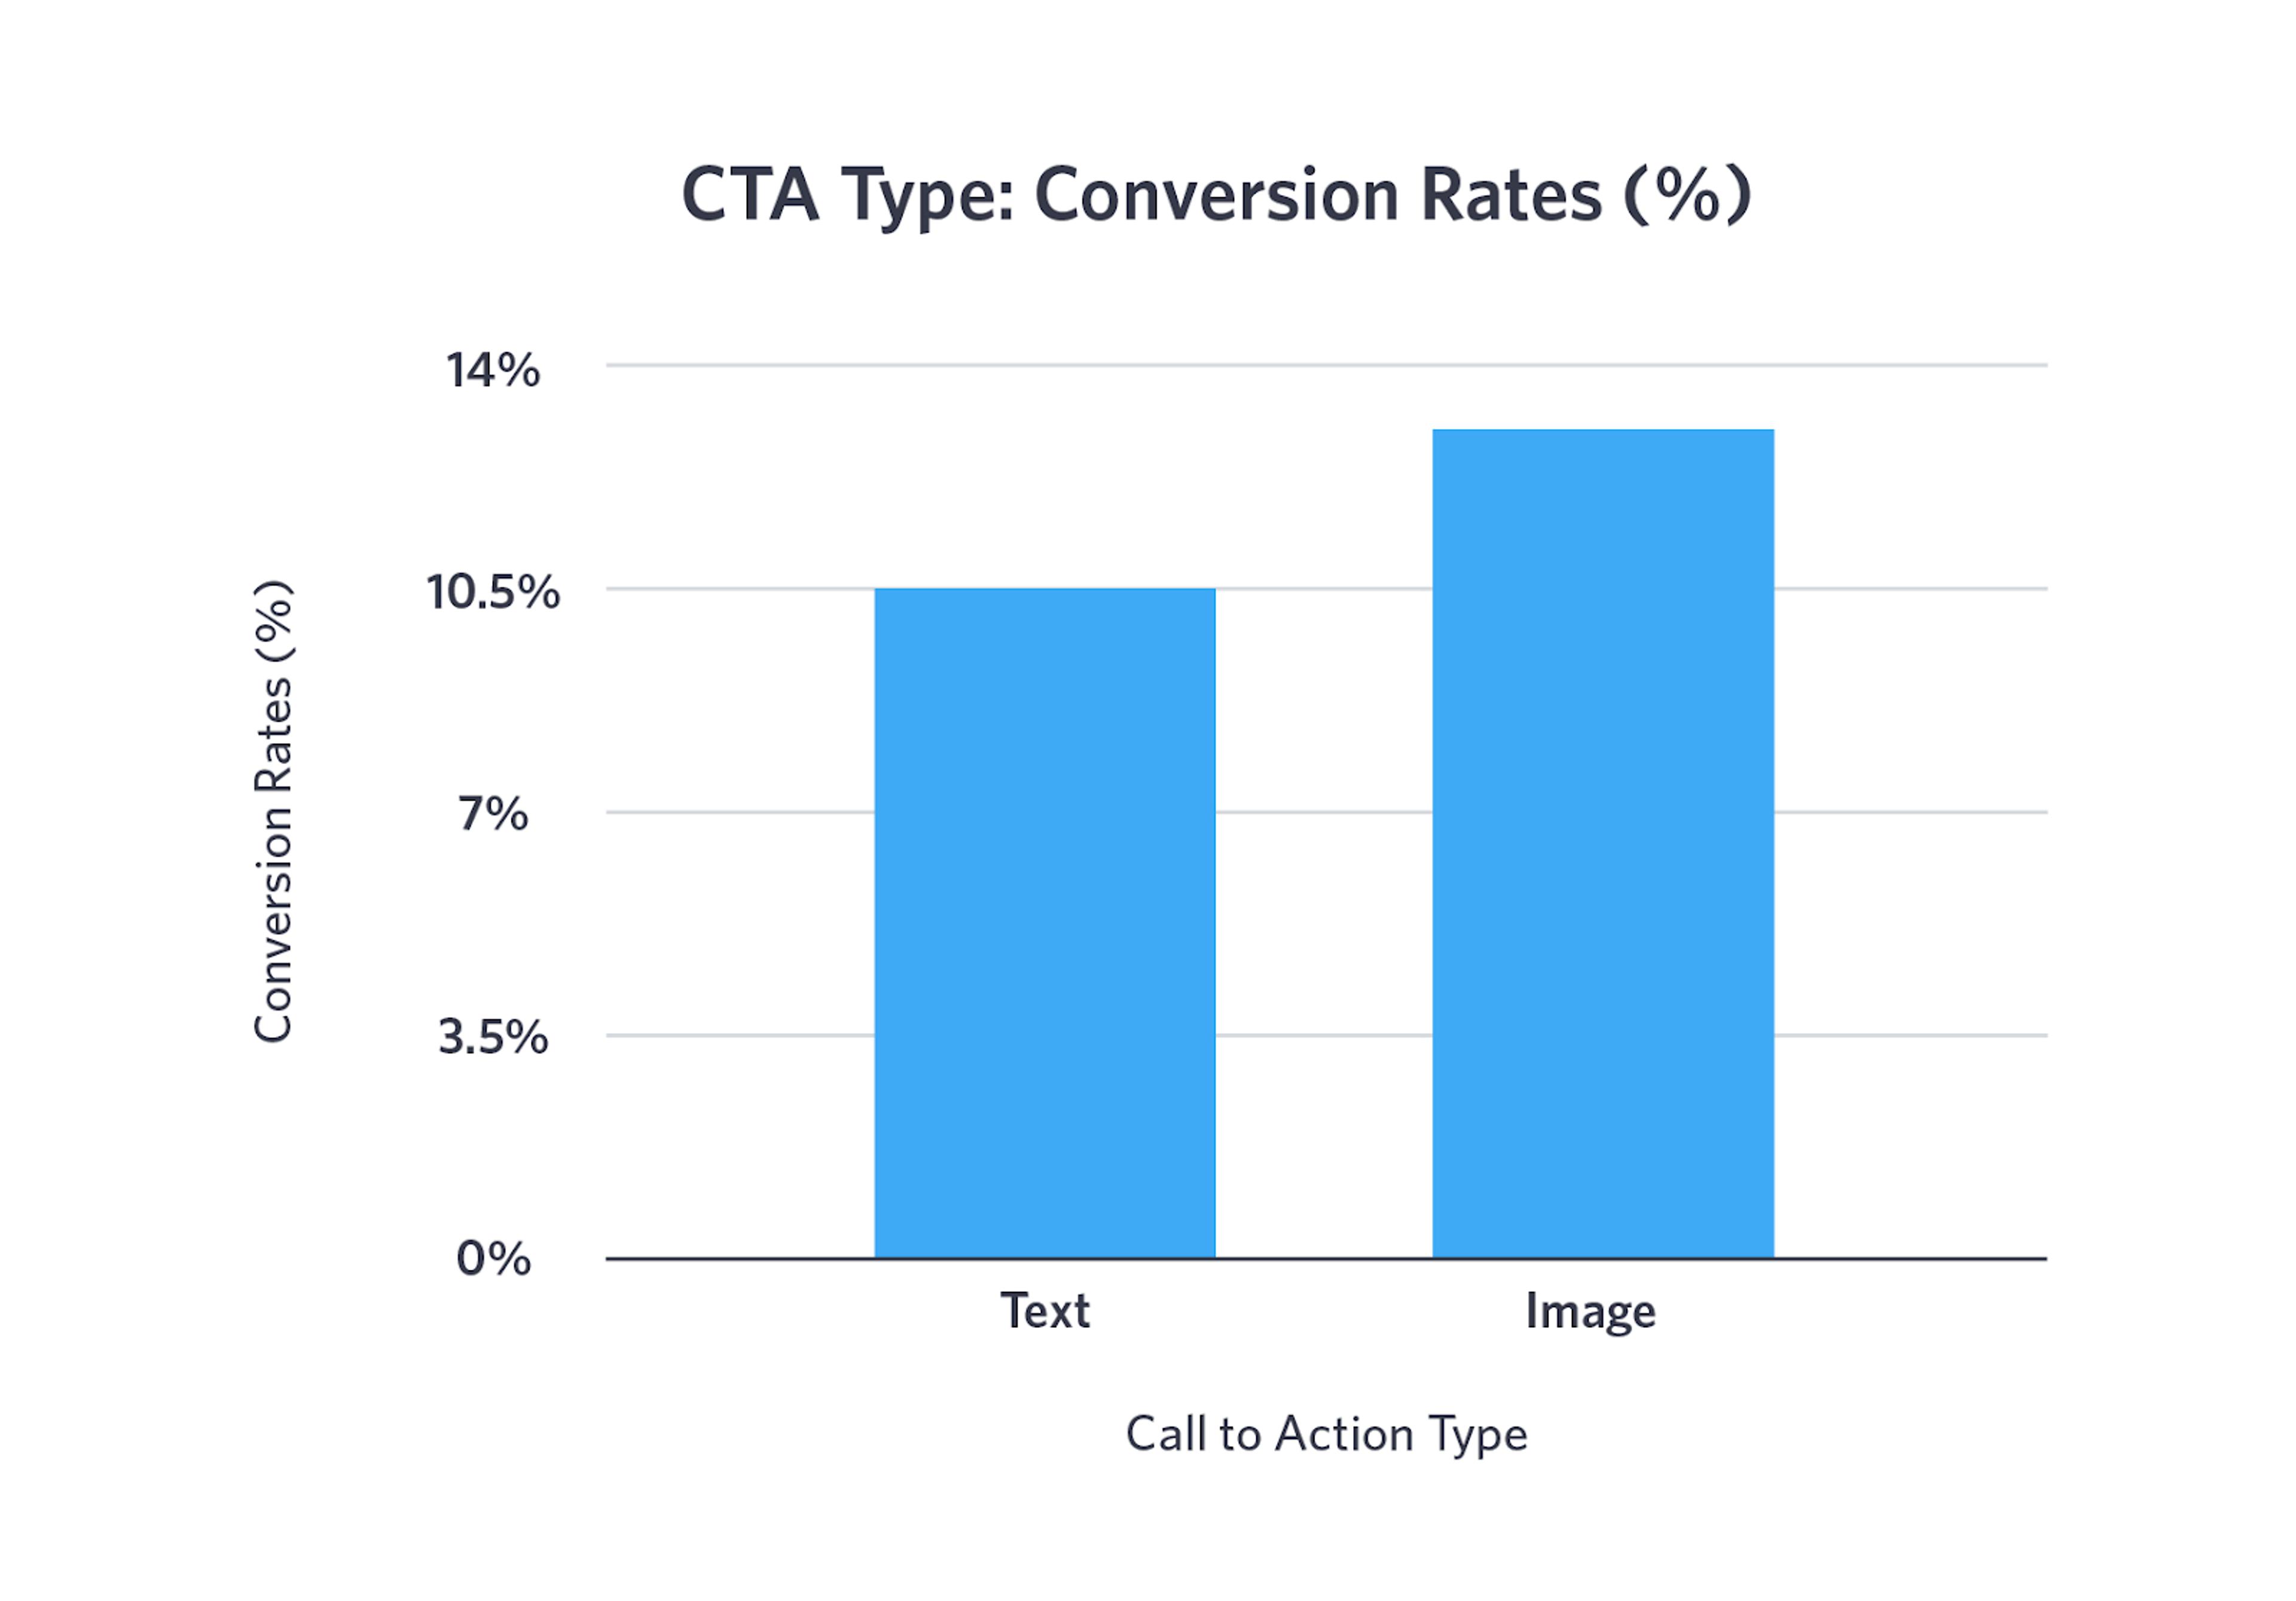 CTA type conversion rates